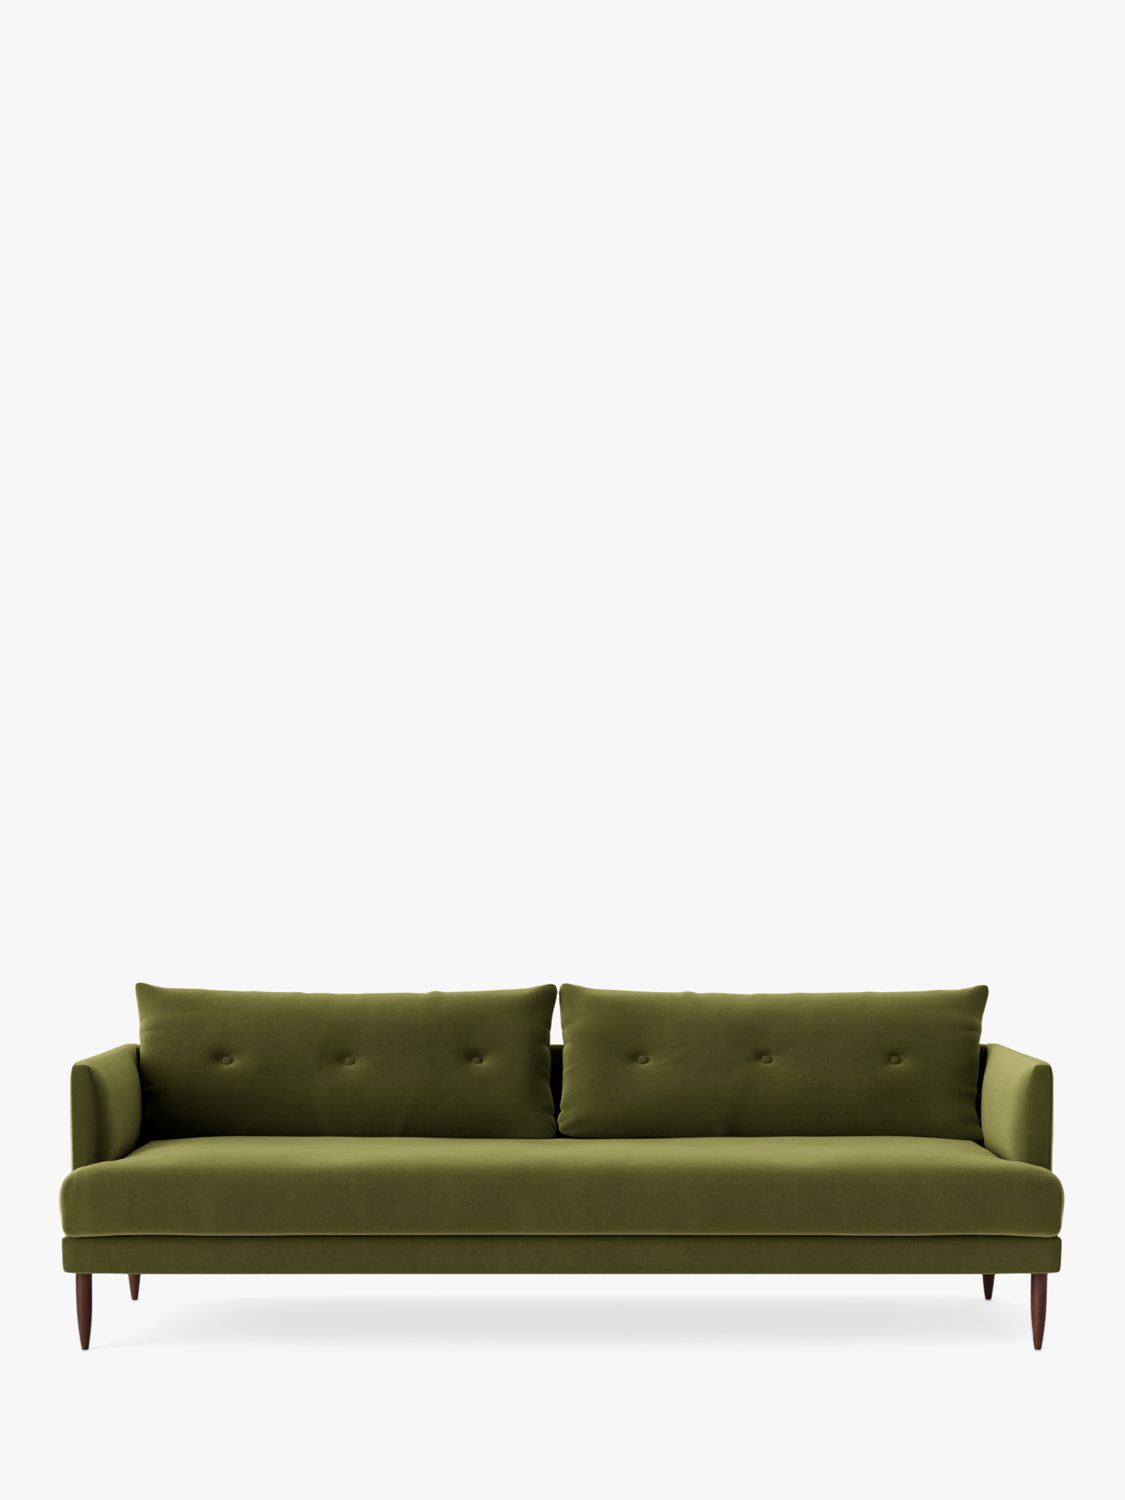 Kalmar Range, Swoon Kalmar Large 3 Seater Sofa, Dark Leg, Fern Velvet